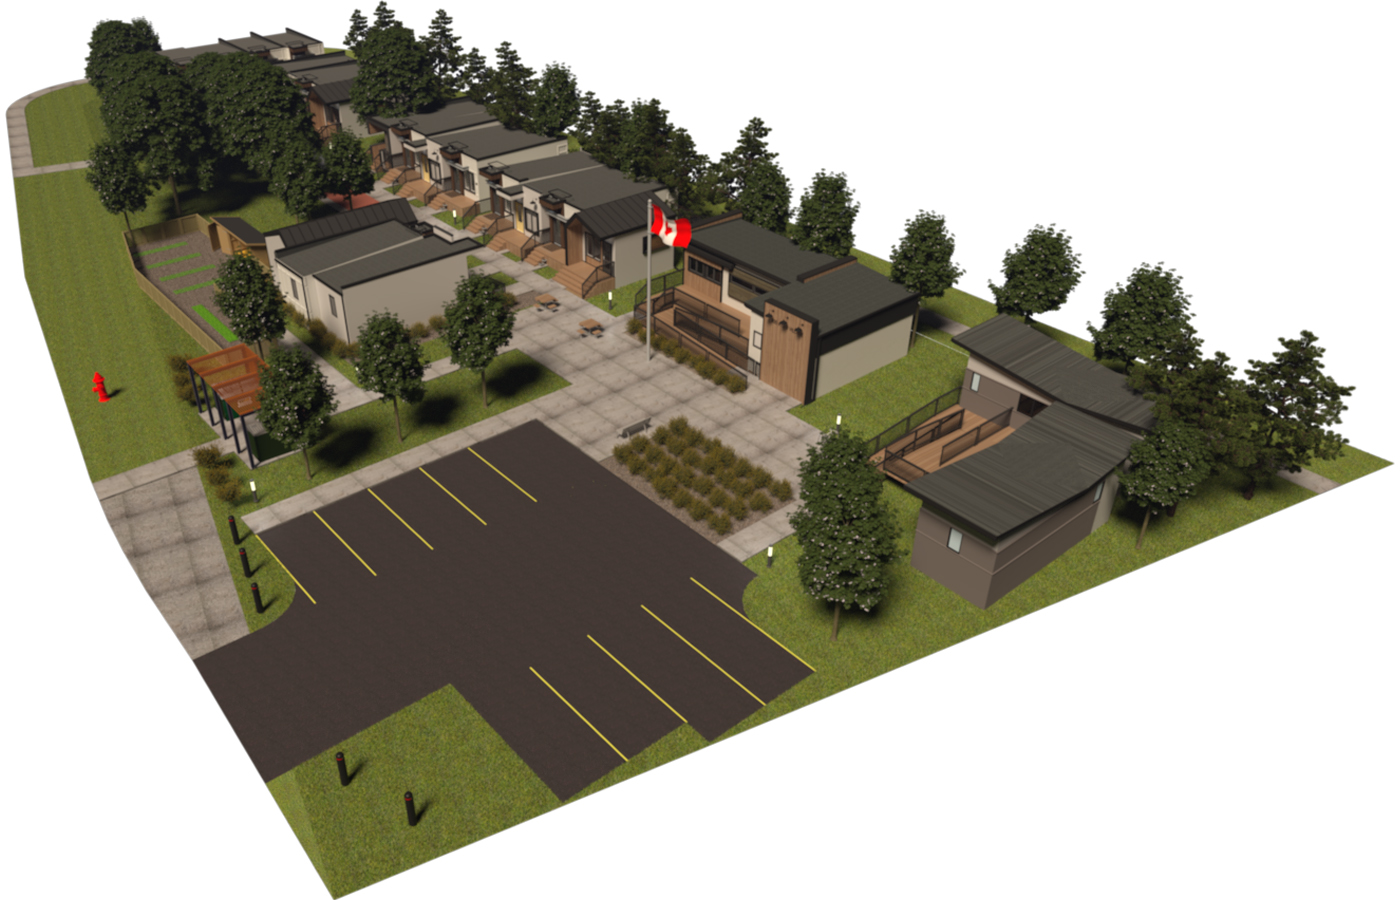 New village in the community of Evanston in Edmonton, Alberta